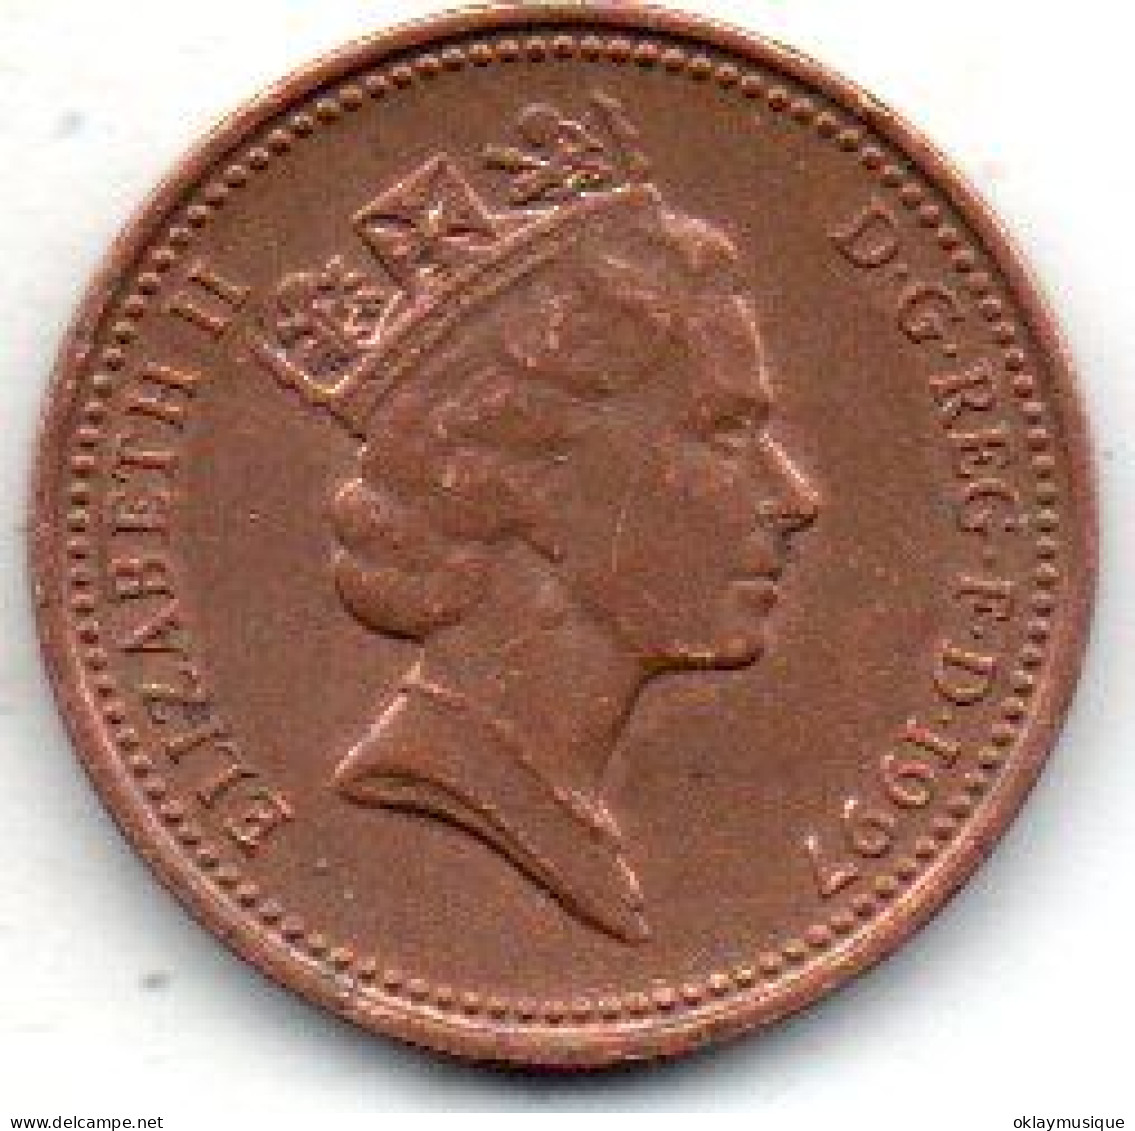 1 New Penny 1997 - 1 Penny & 1 New Penny